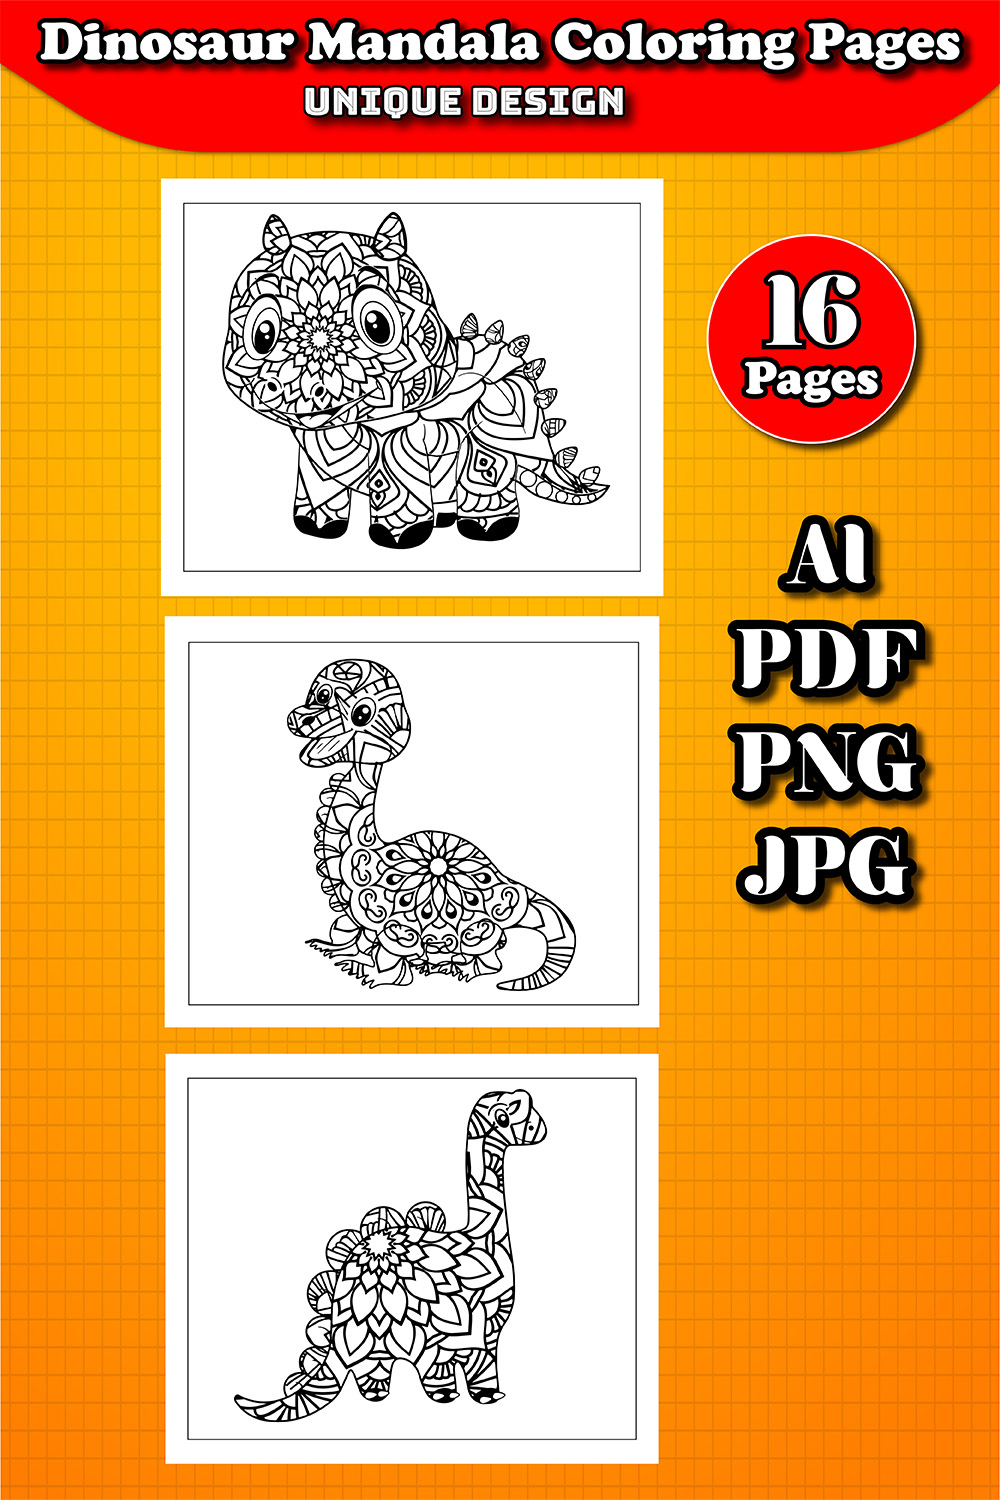 printerest image Dinosaur Mandala Coloring Pages.